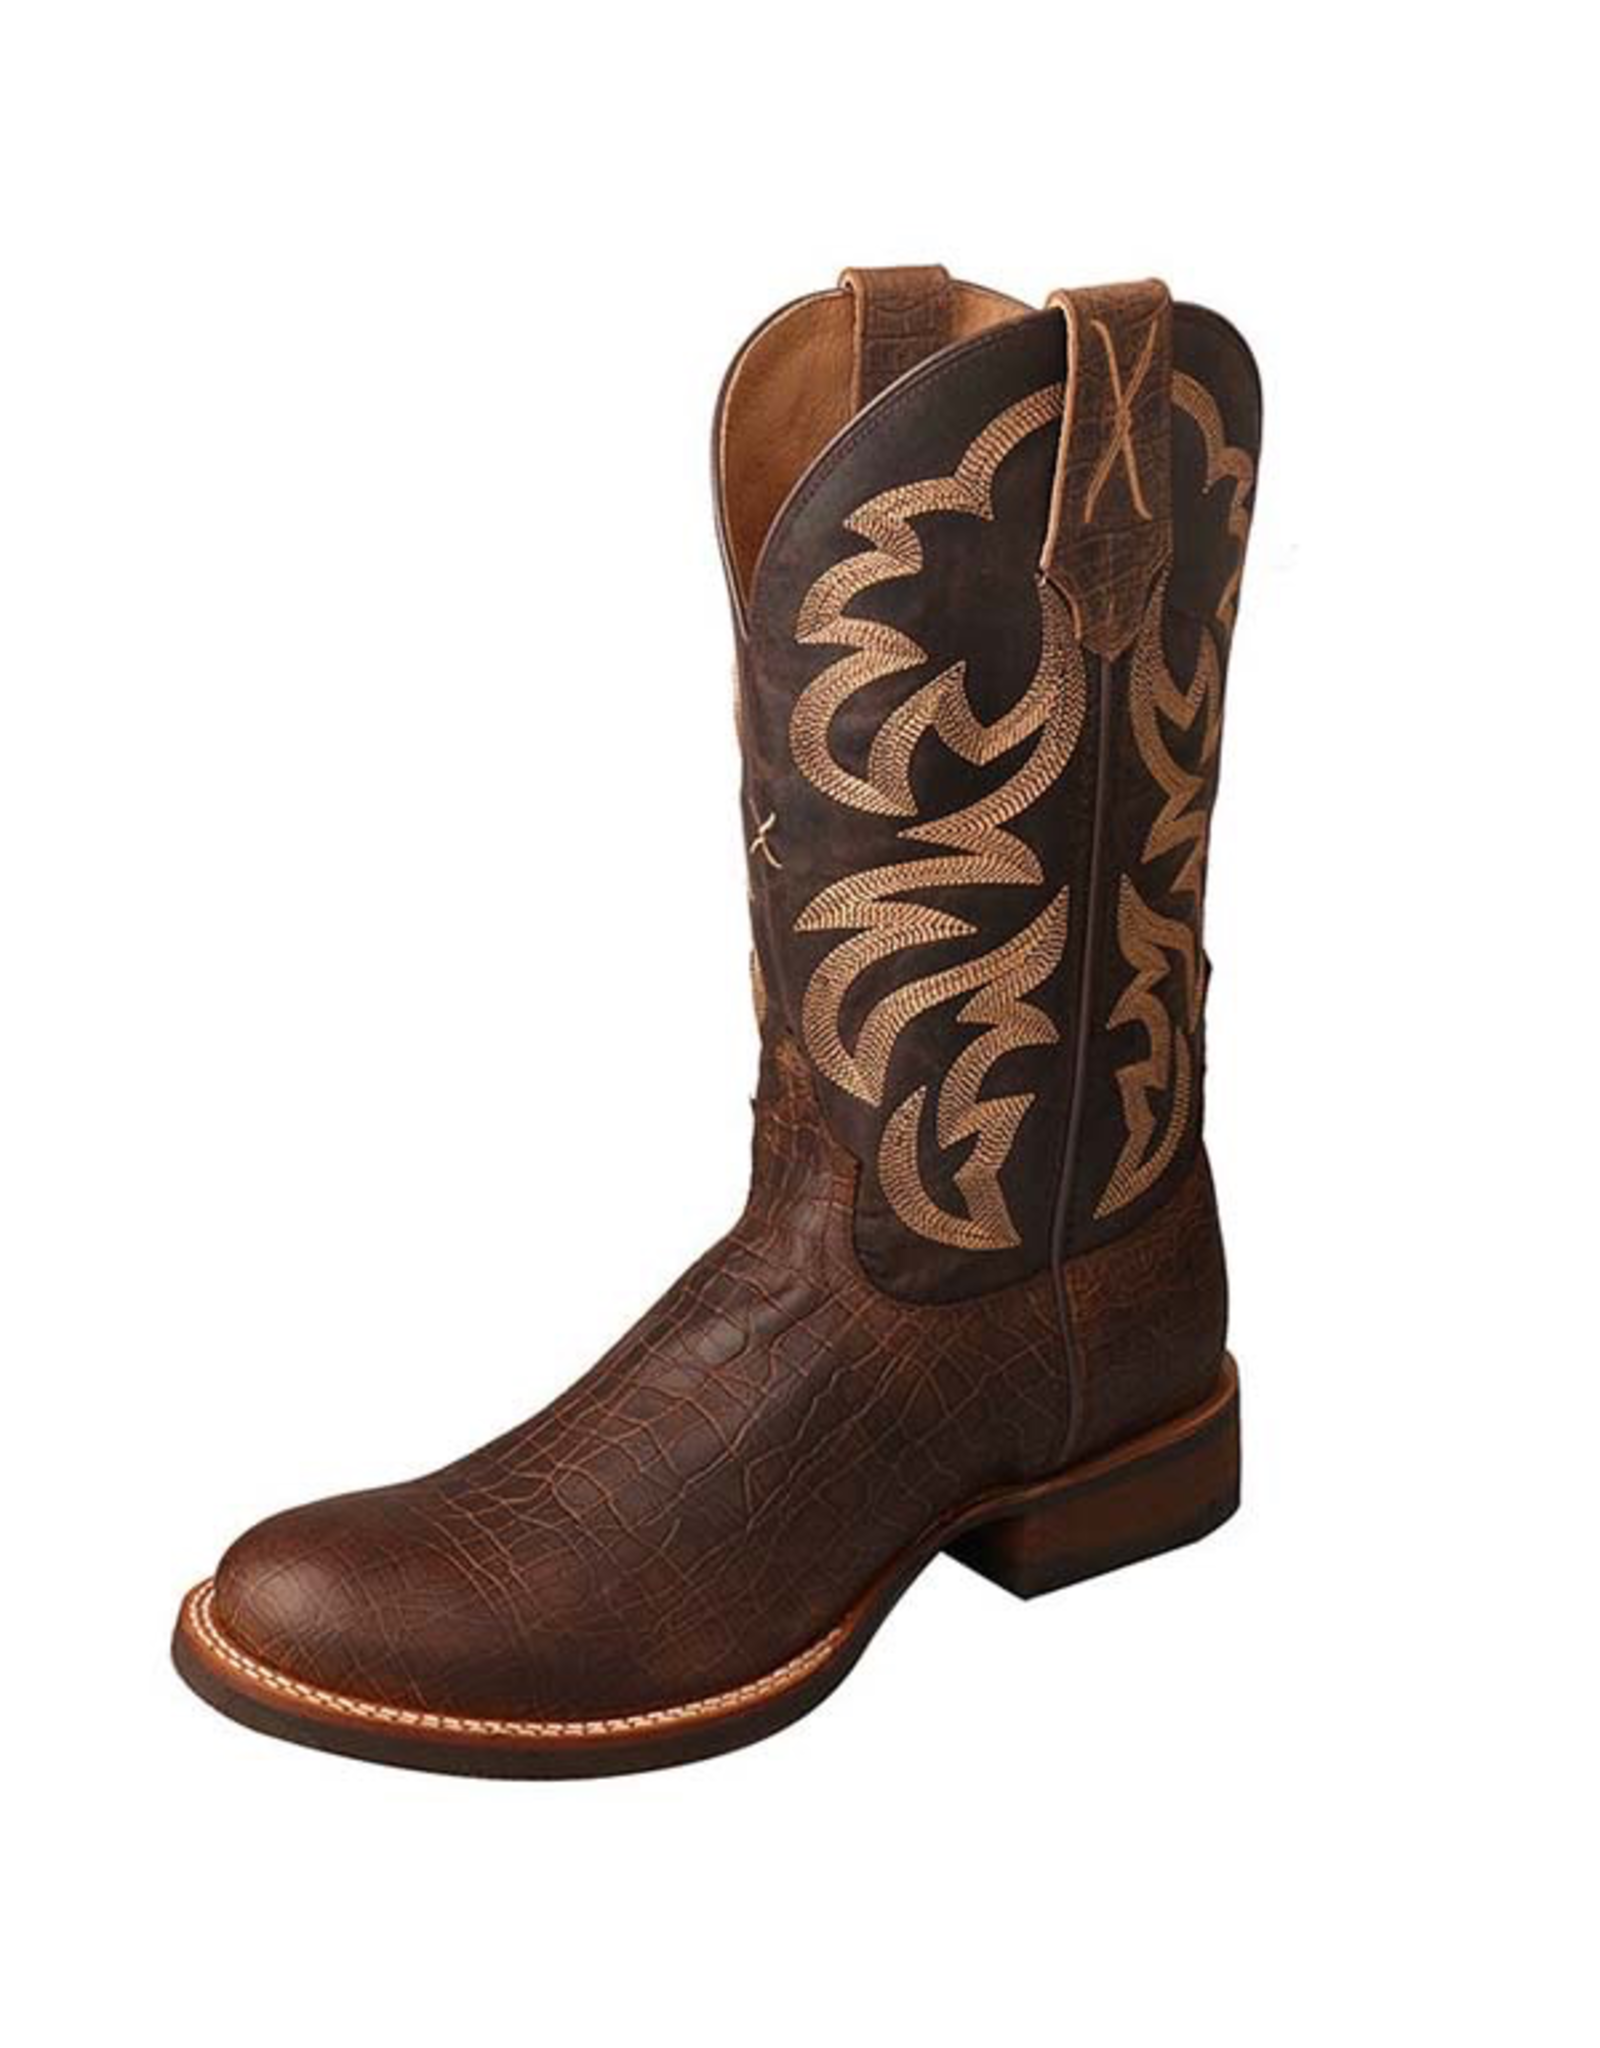 rancher boots